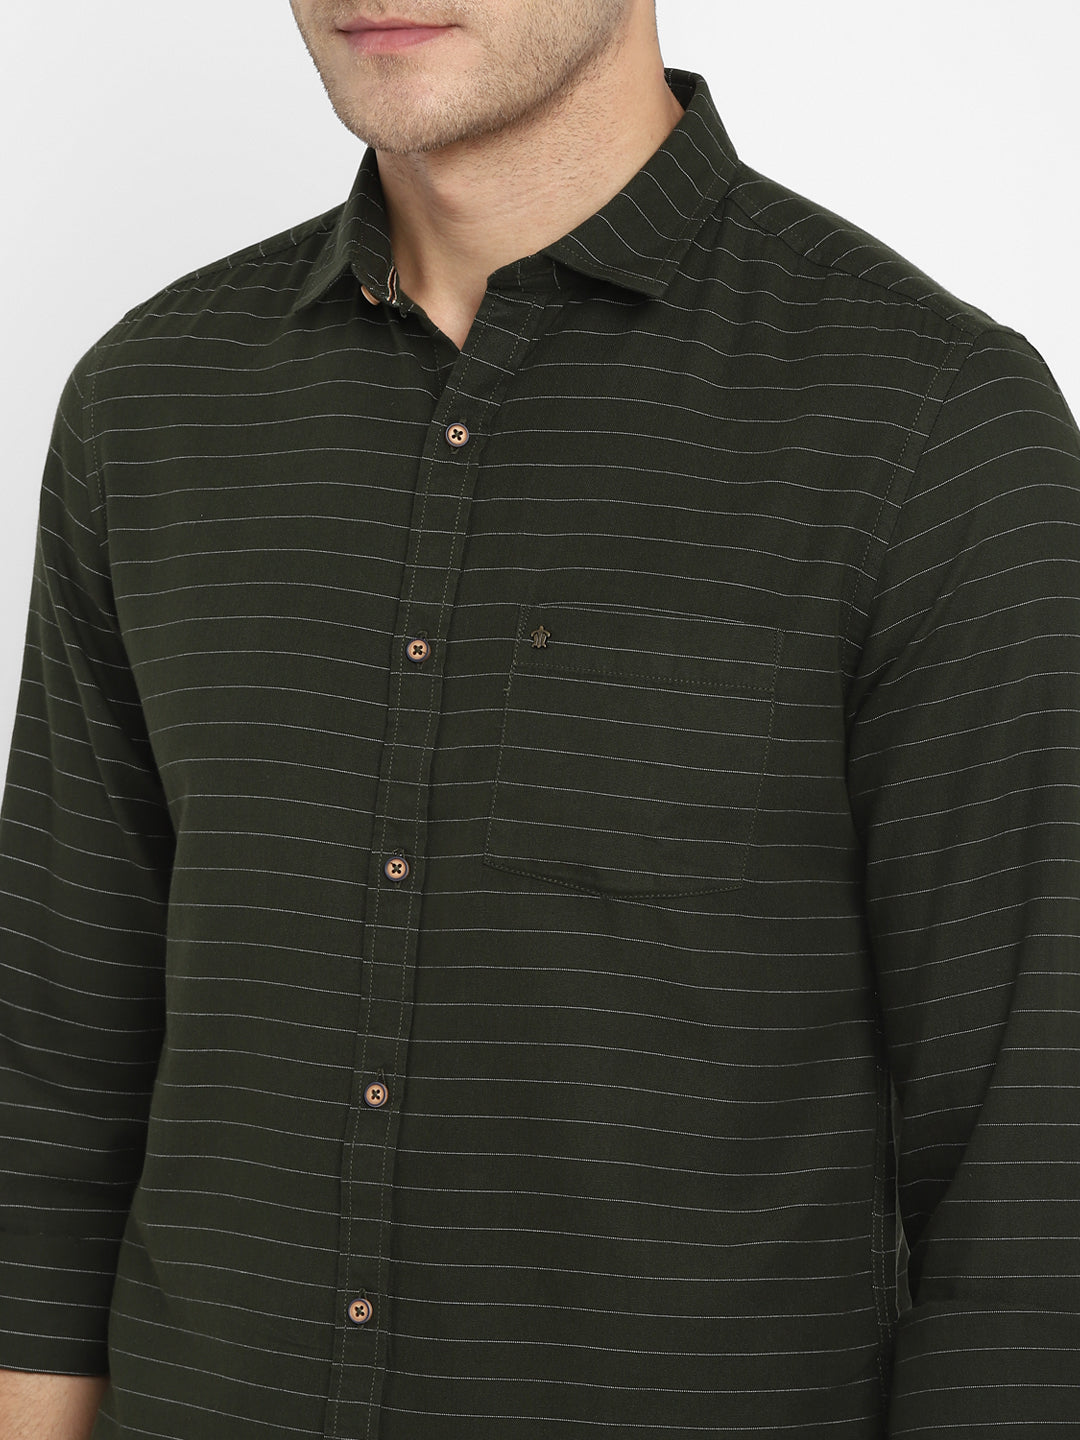 Turtle Men Olive Striped Cotton Slim Fit Shirts